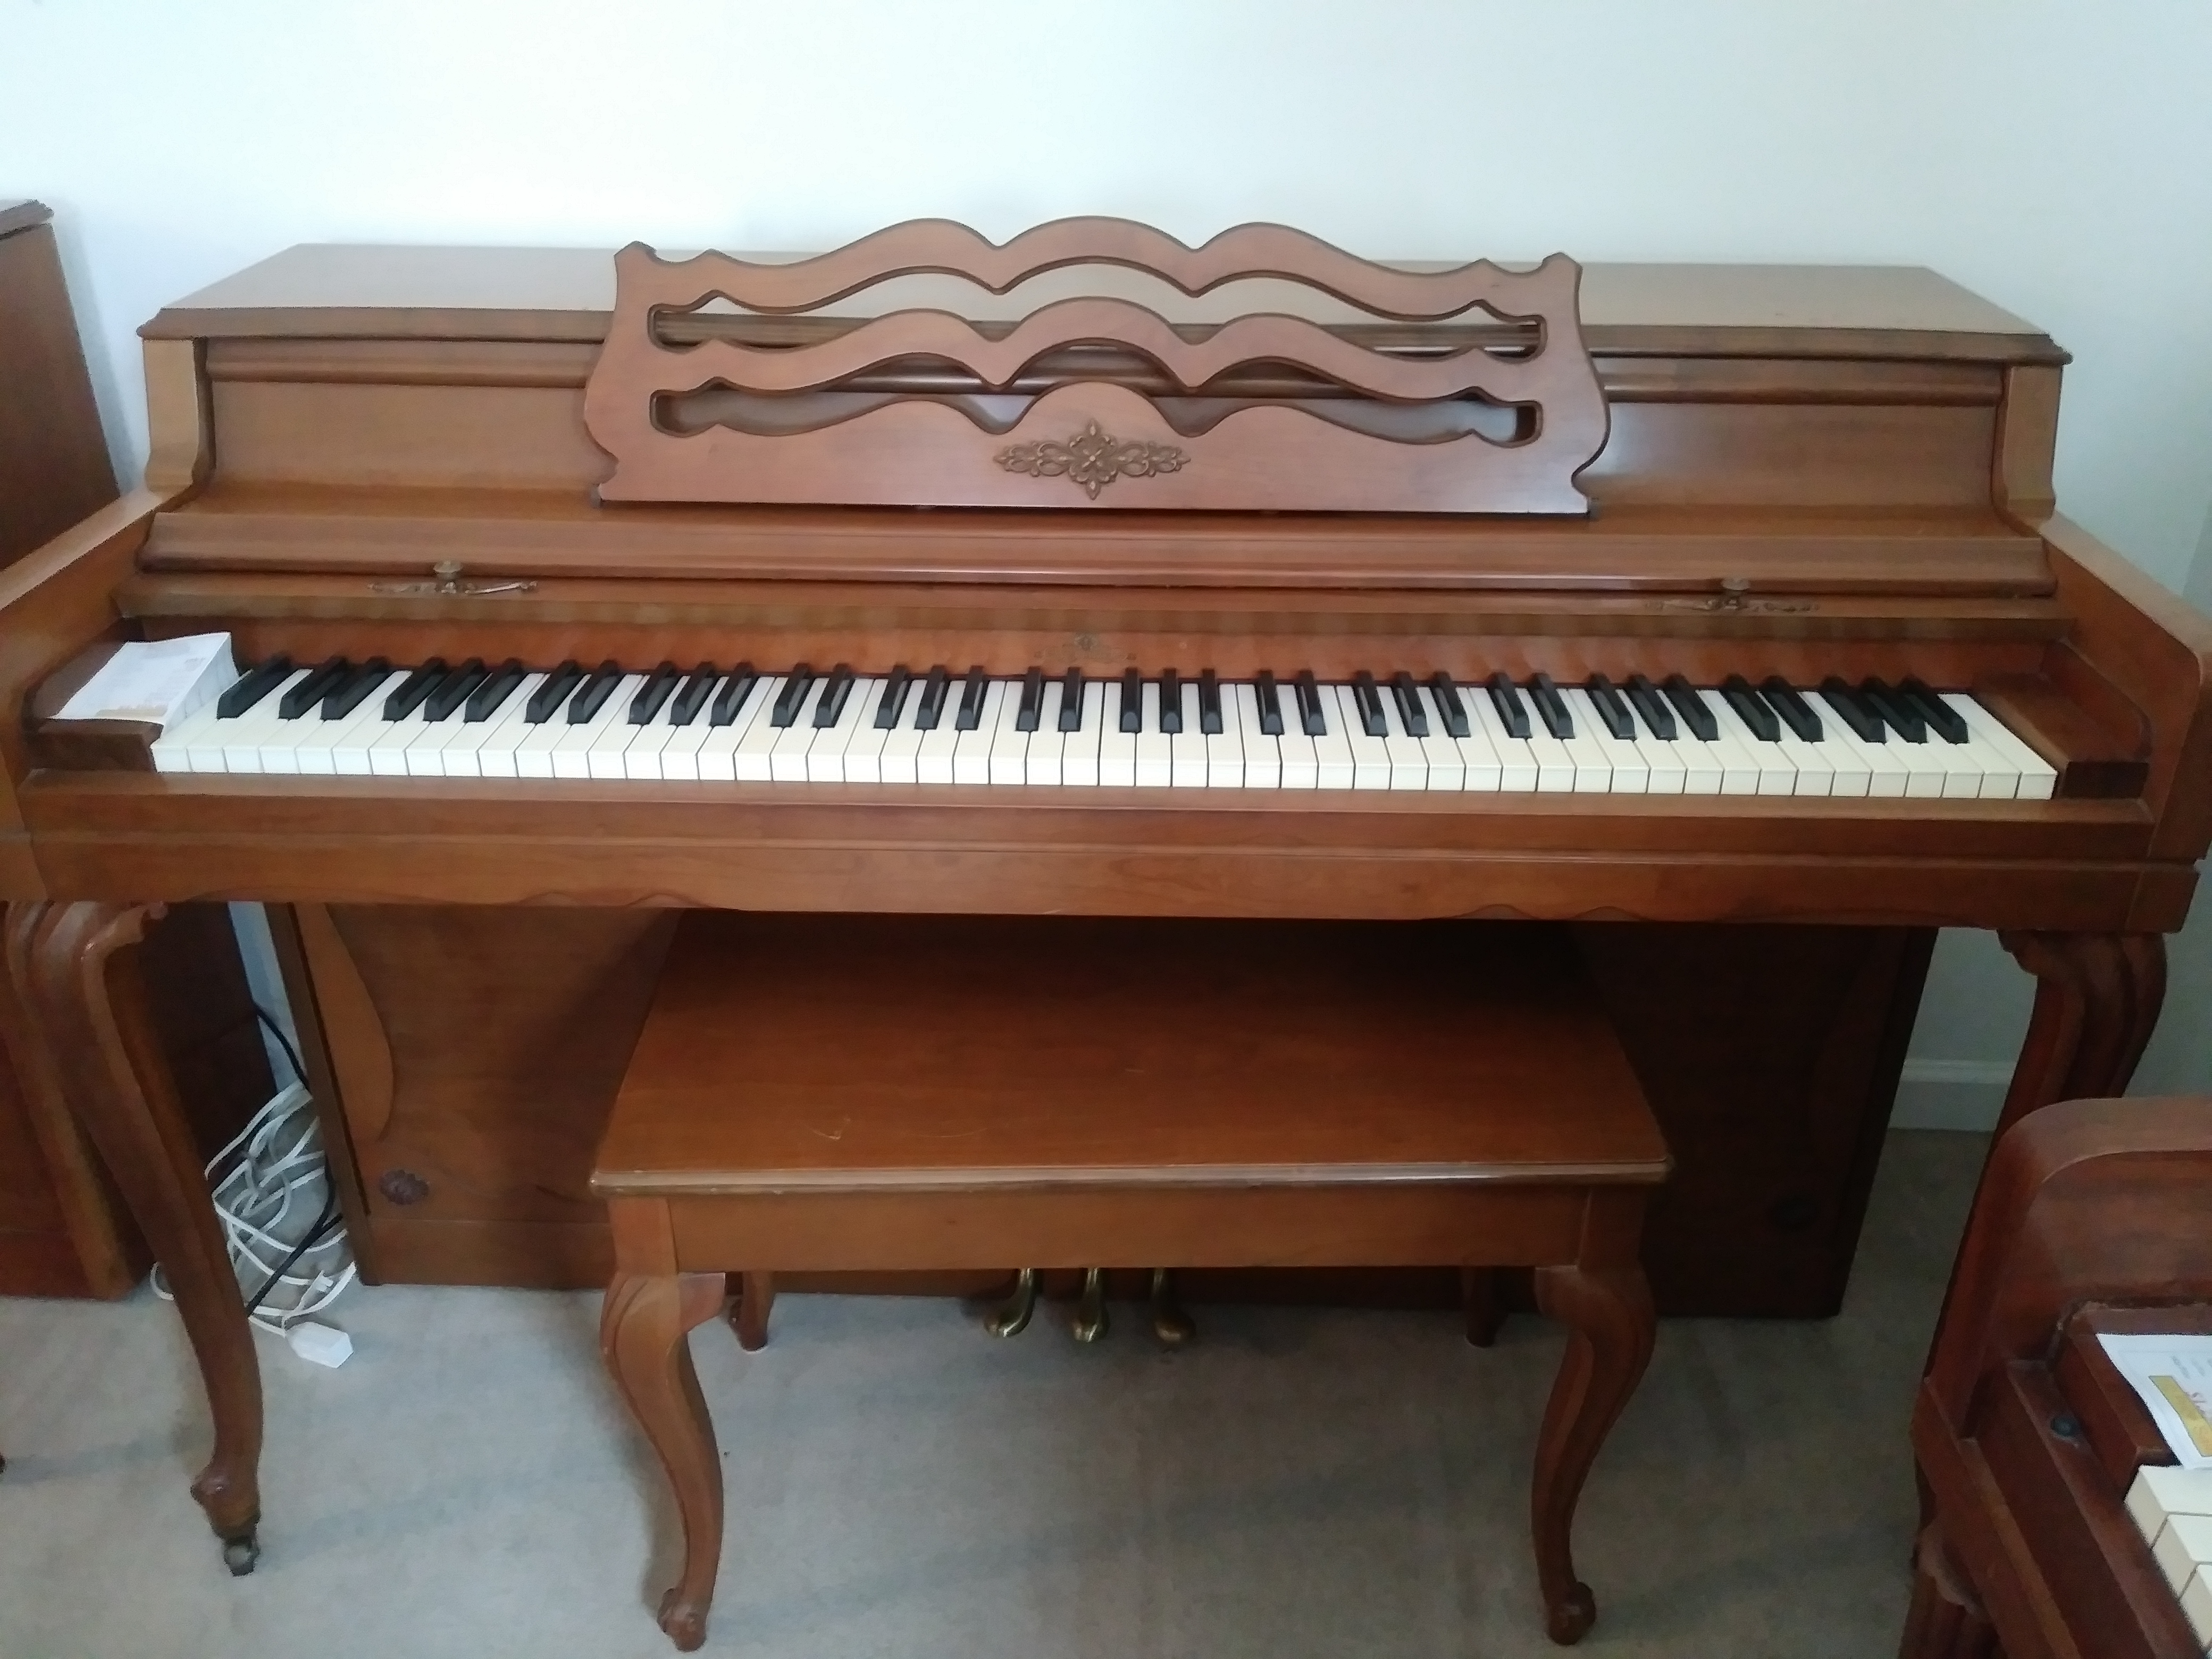 1940 wurlitzer spinet piano